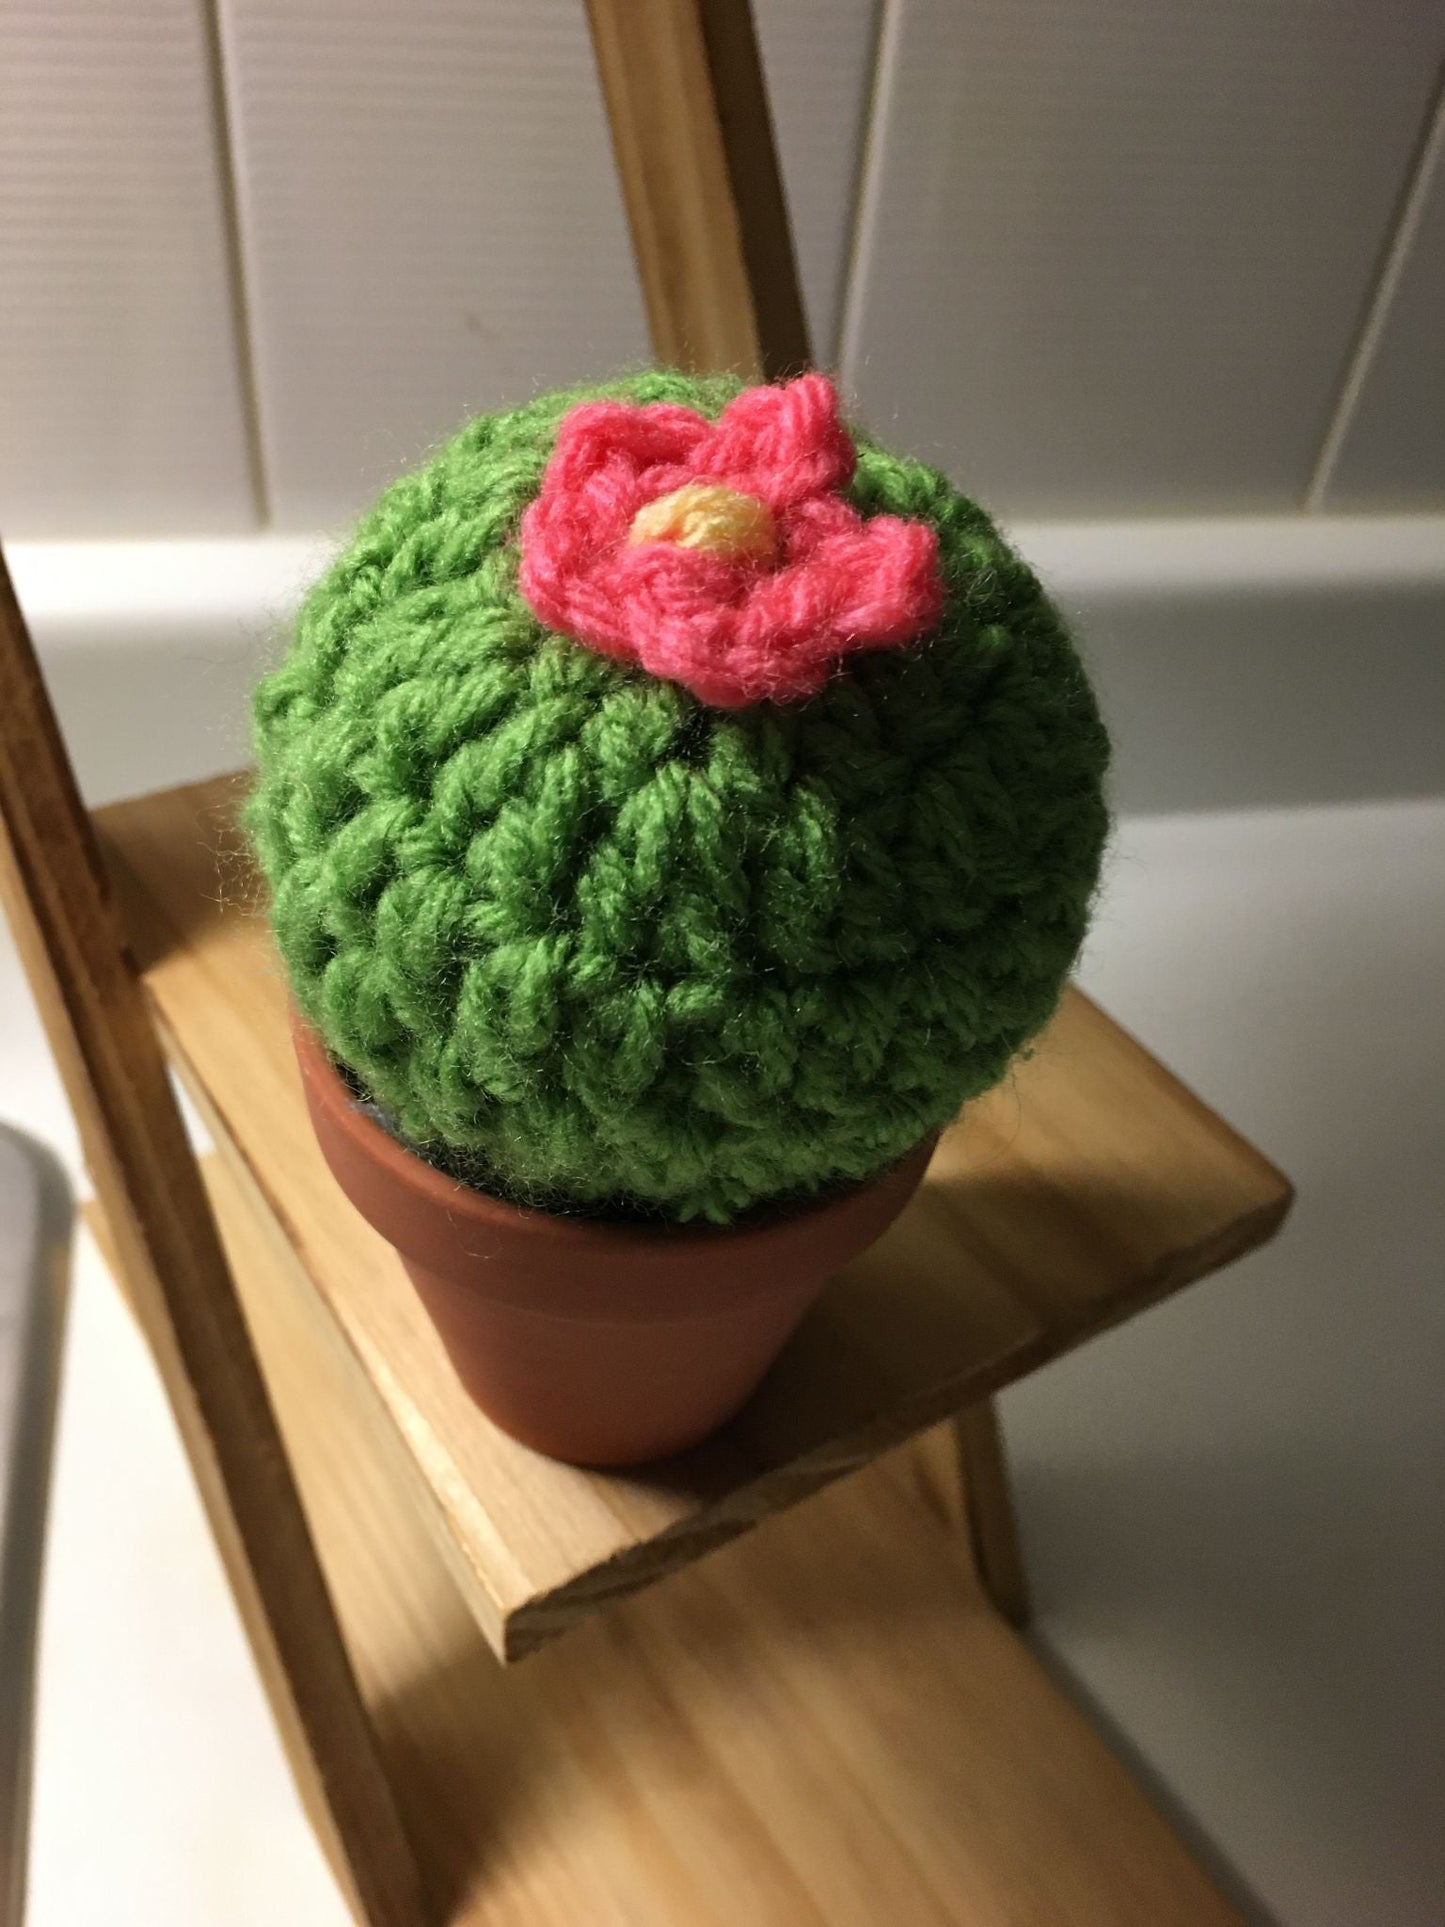 Moes knits crochet cactus - 2